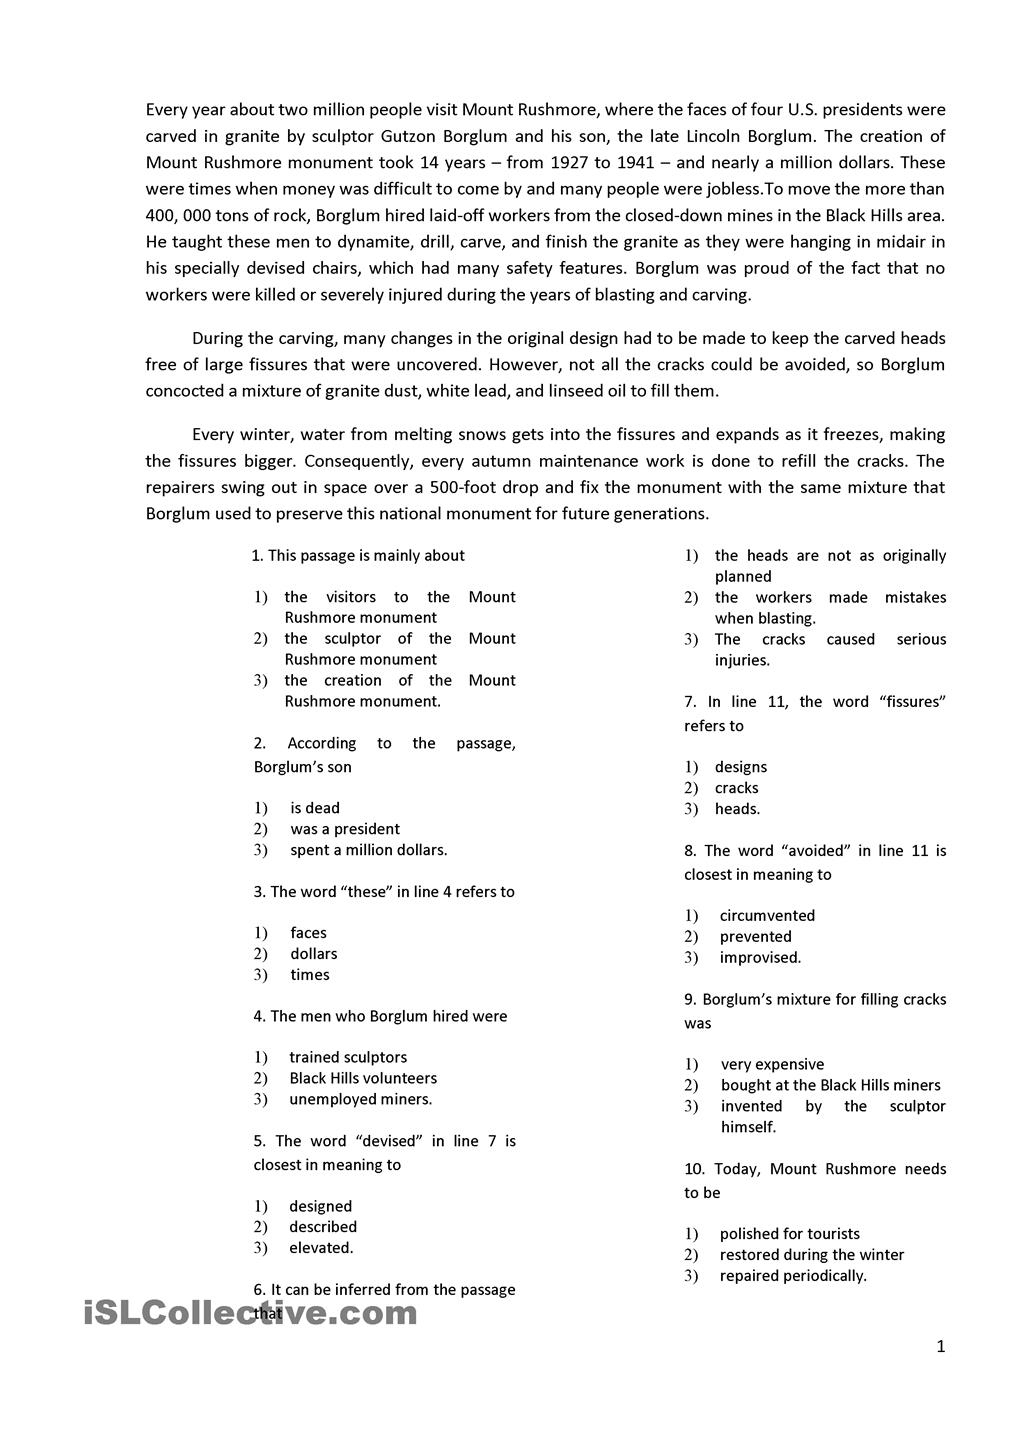 Worksheet : Free Printable Reading Comprehension Worksheets Grade 2 | Free Printable Middle School Reading Comprehension Worksheets